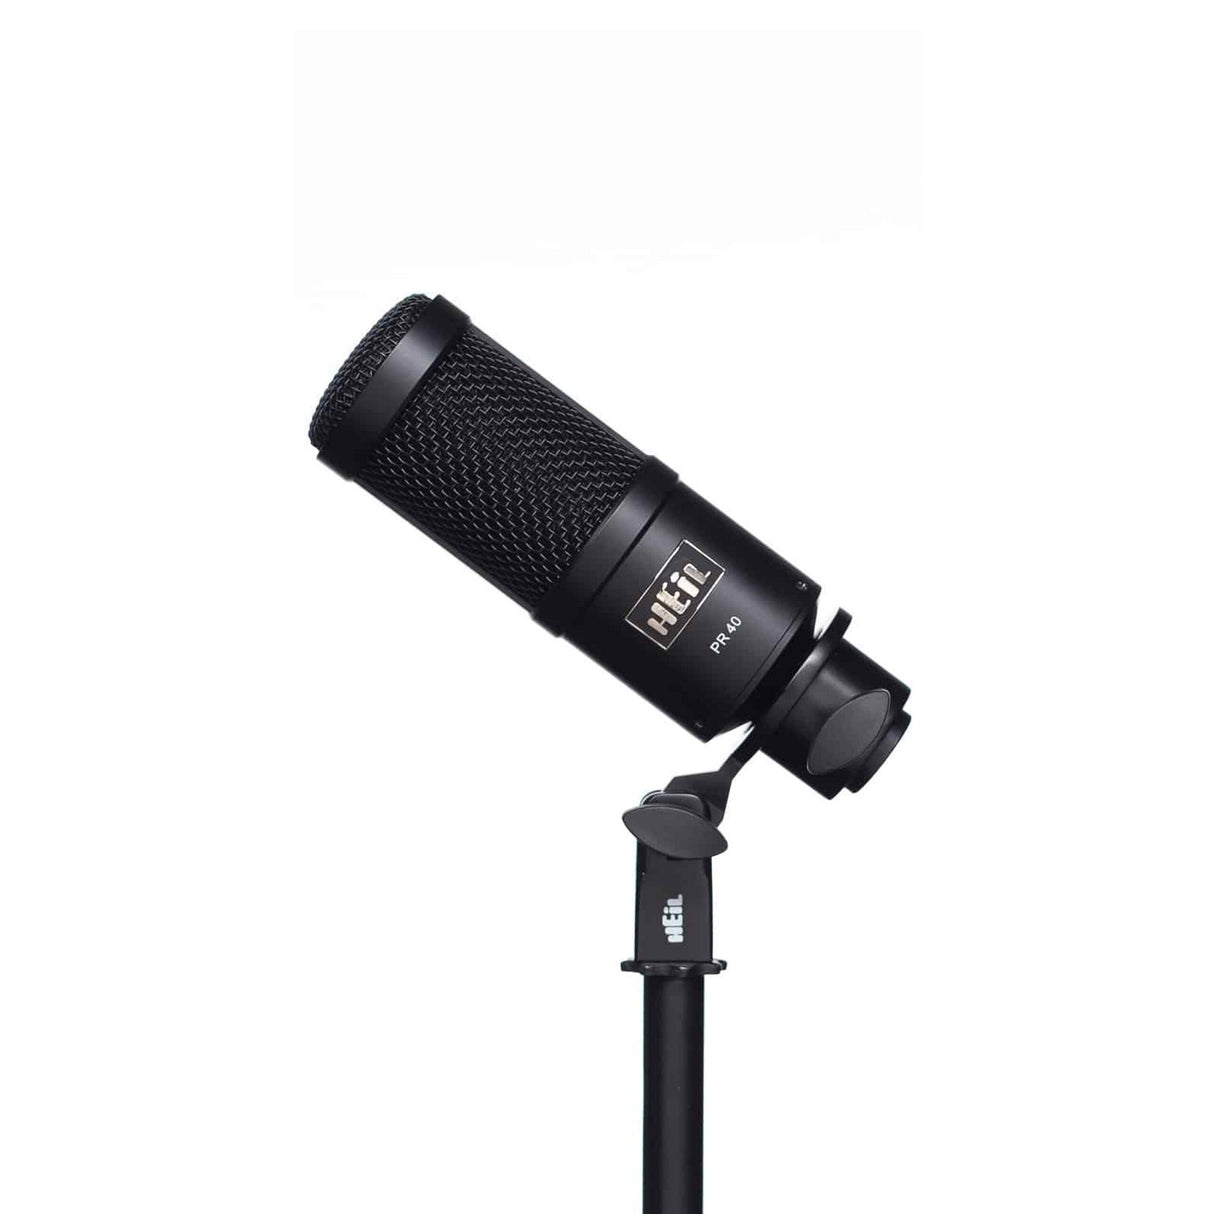 Heil Sound PR 40 Cardioid Dynamic Studio Microphone, Black